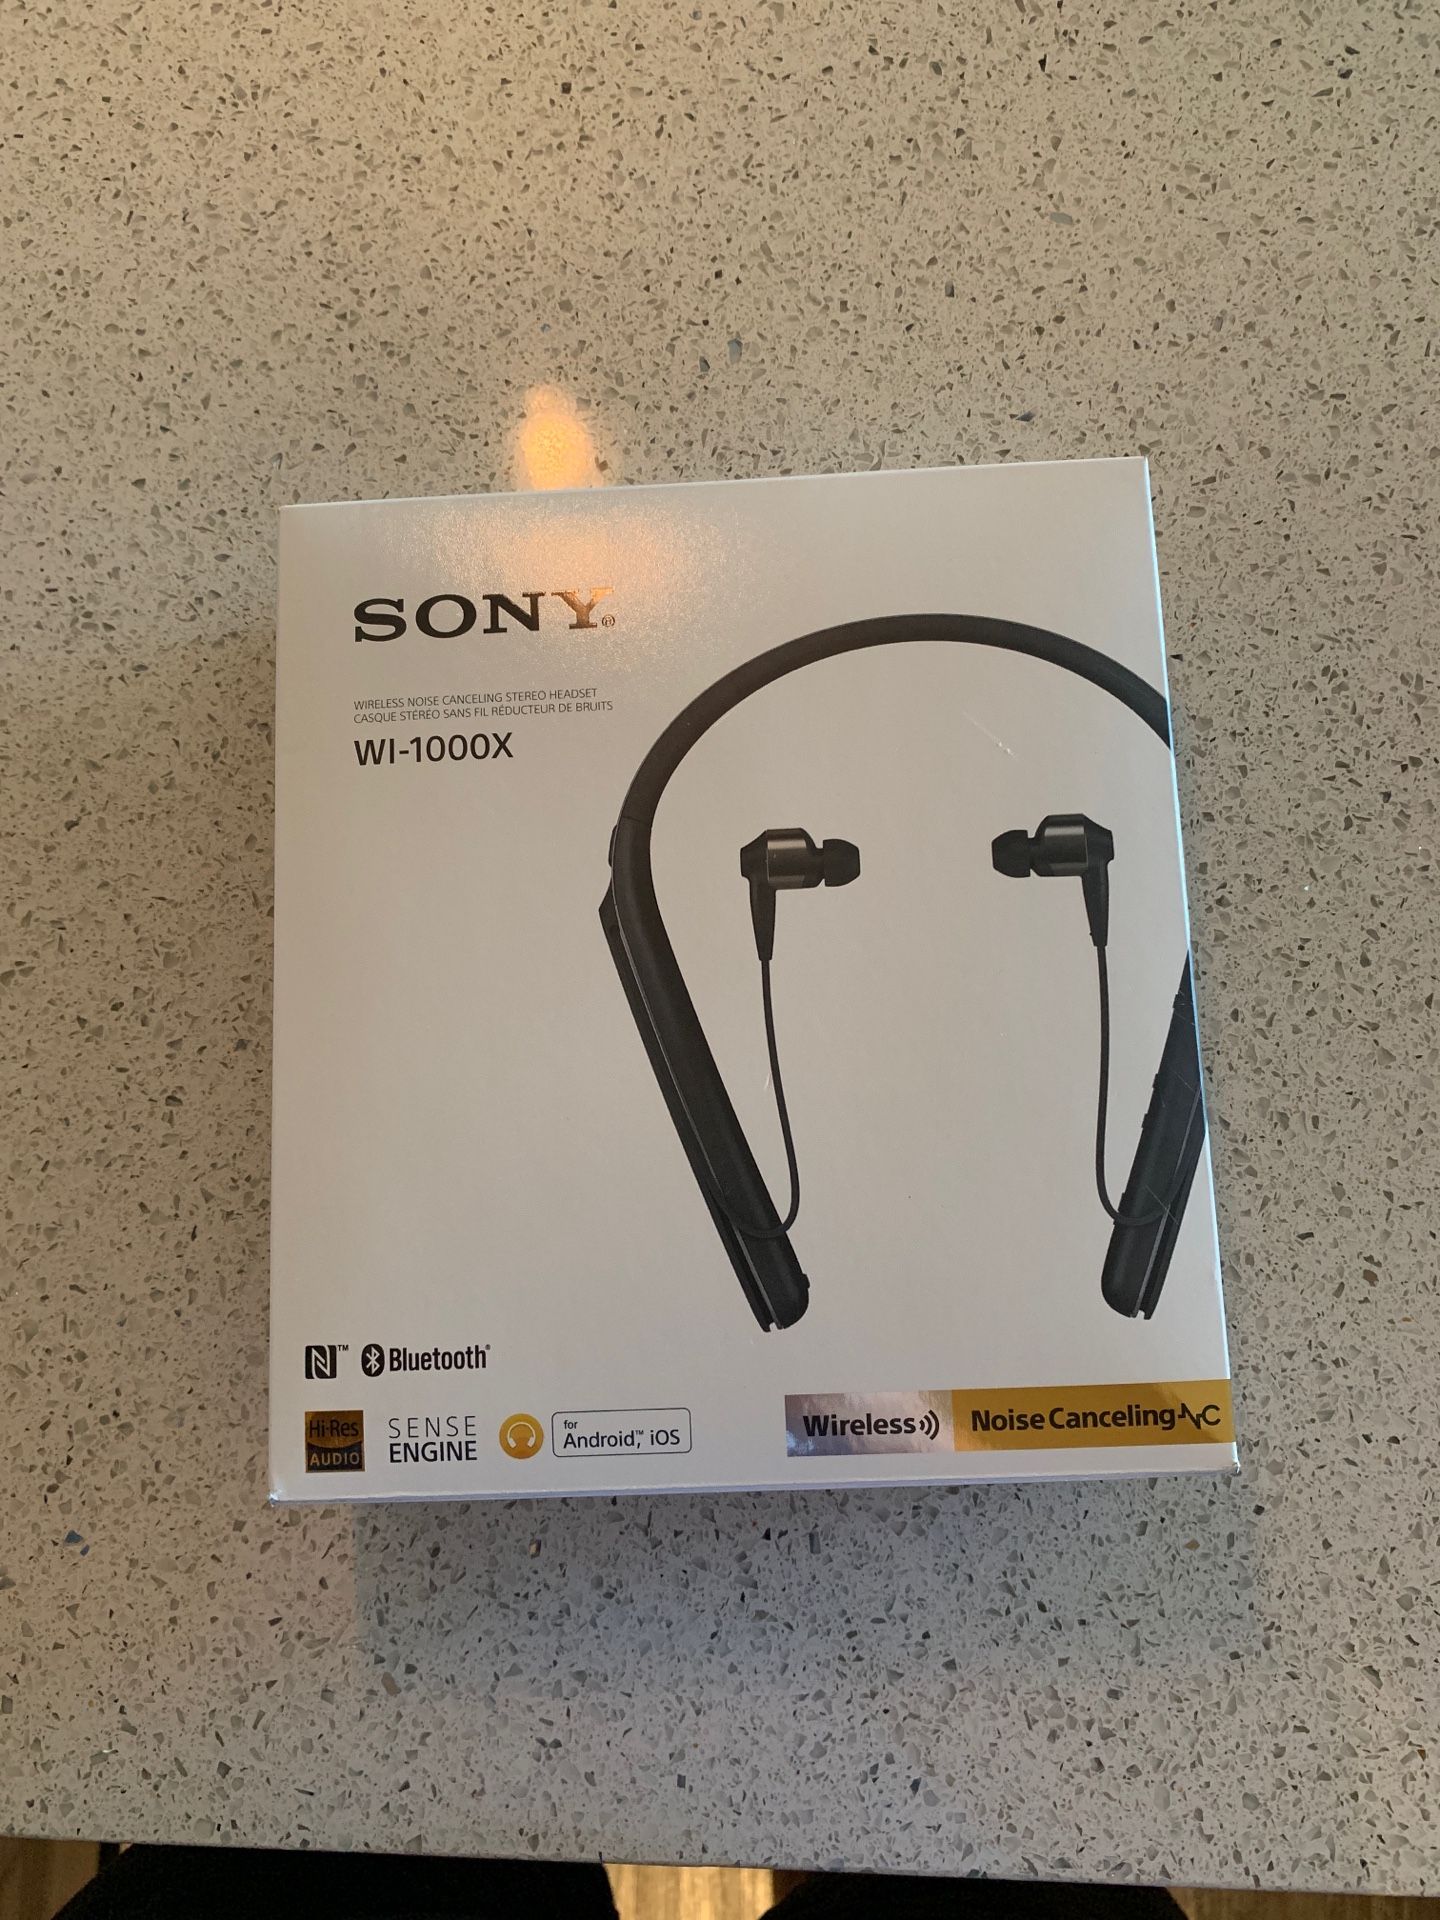 Sony WI-1000X noise canceling headphones